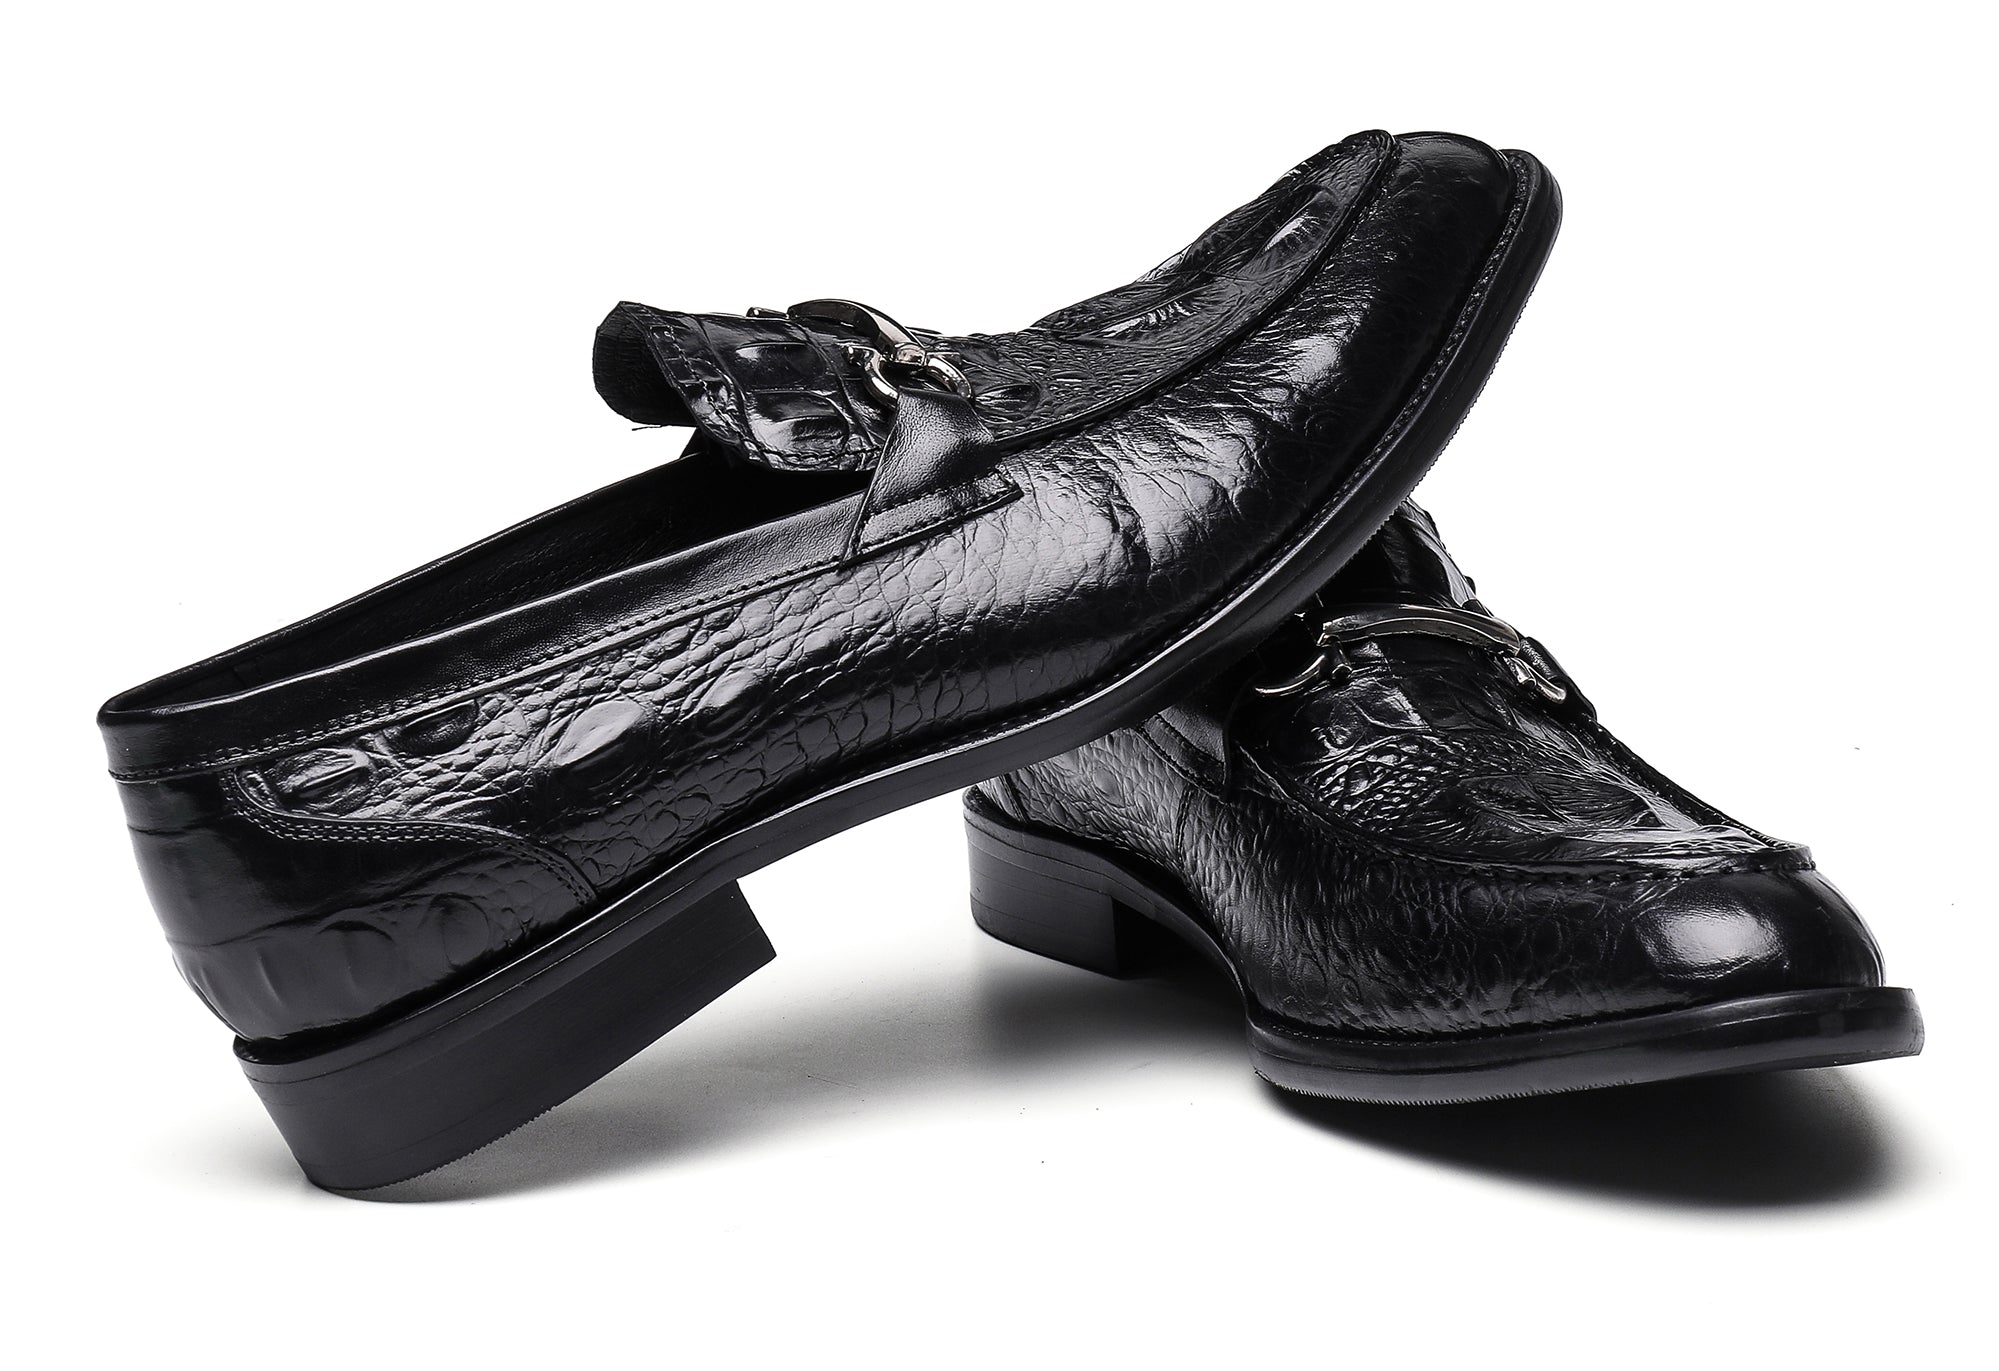 Men's Alligator Patent Loafers